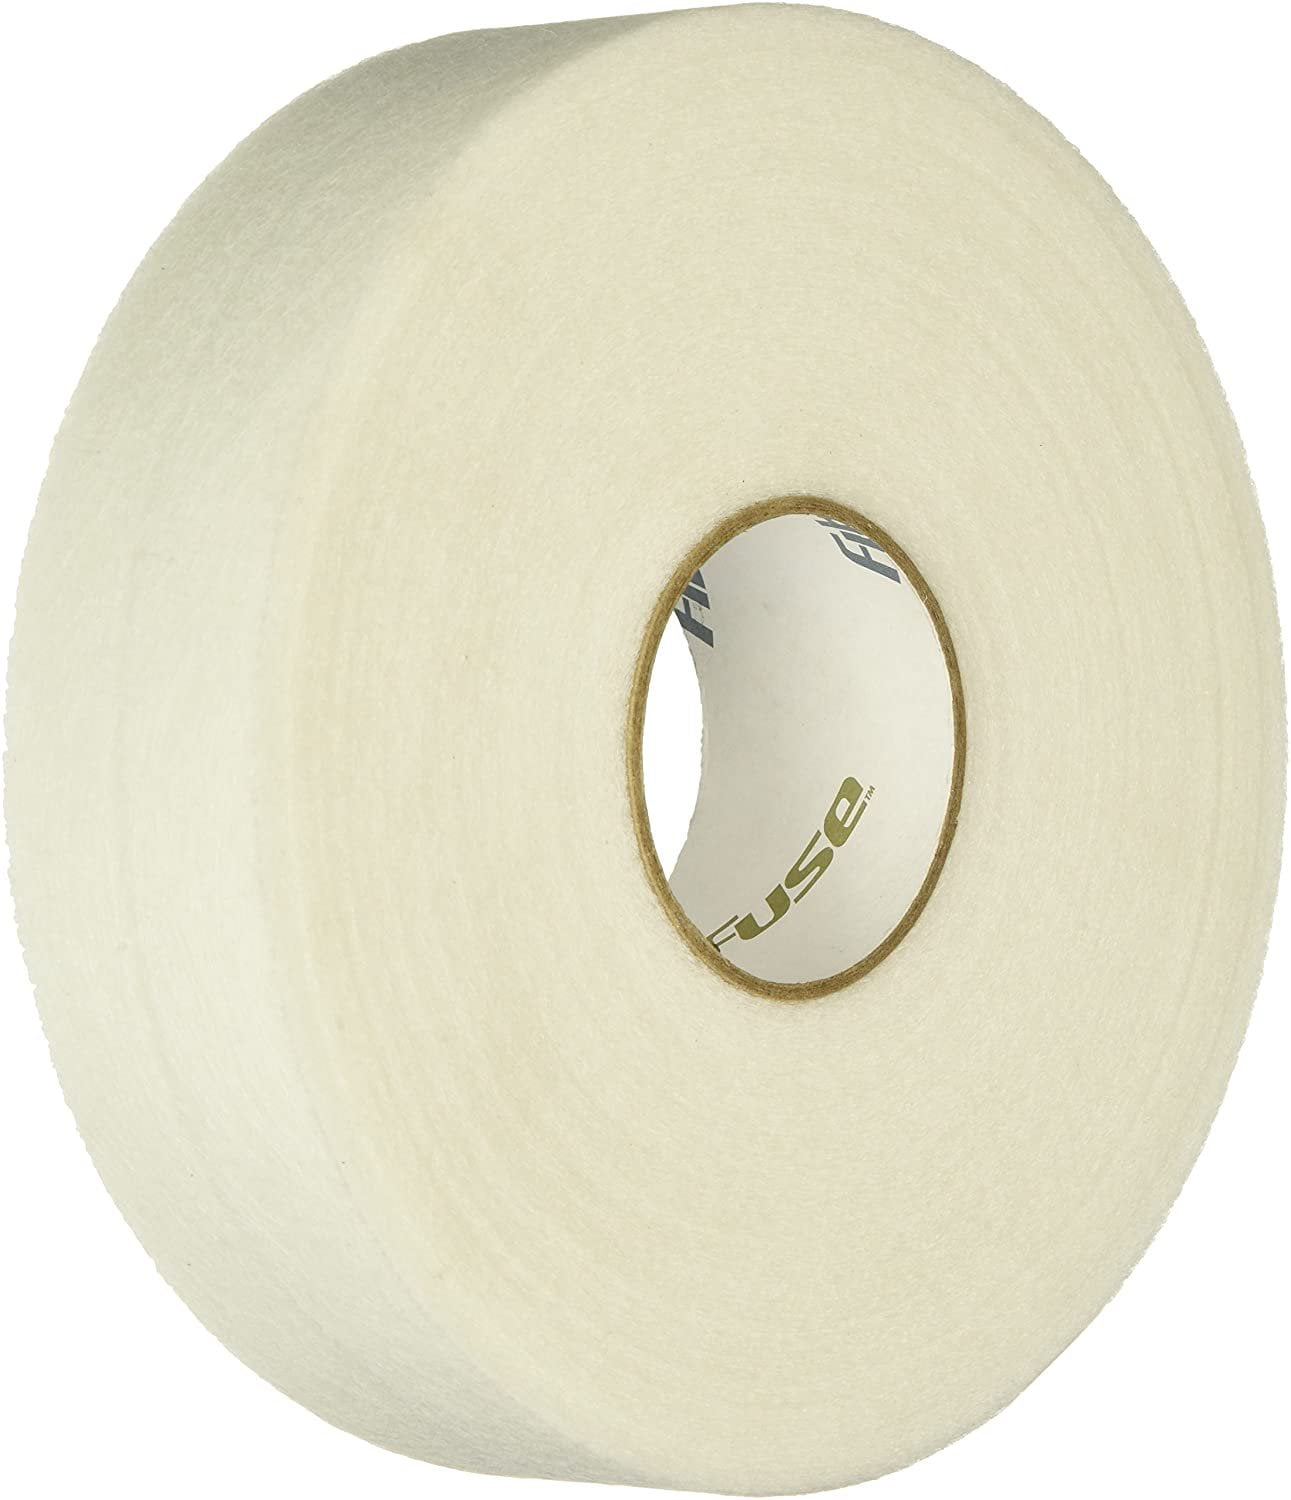 FibaFuse Paperless Drywall Tape - 500 ft Roll - FDW8203-U